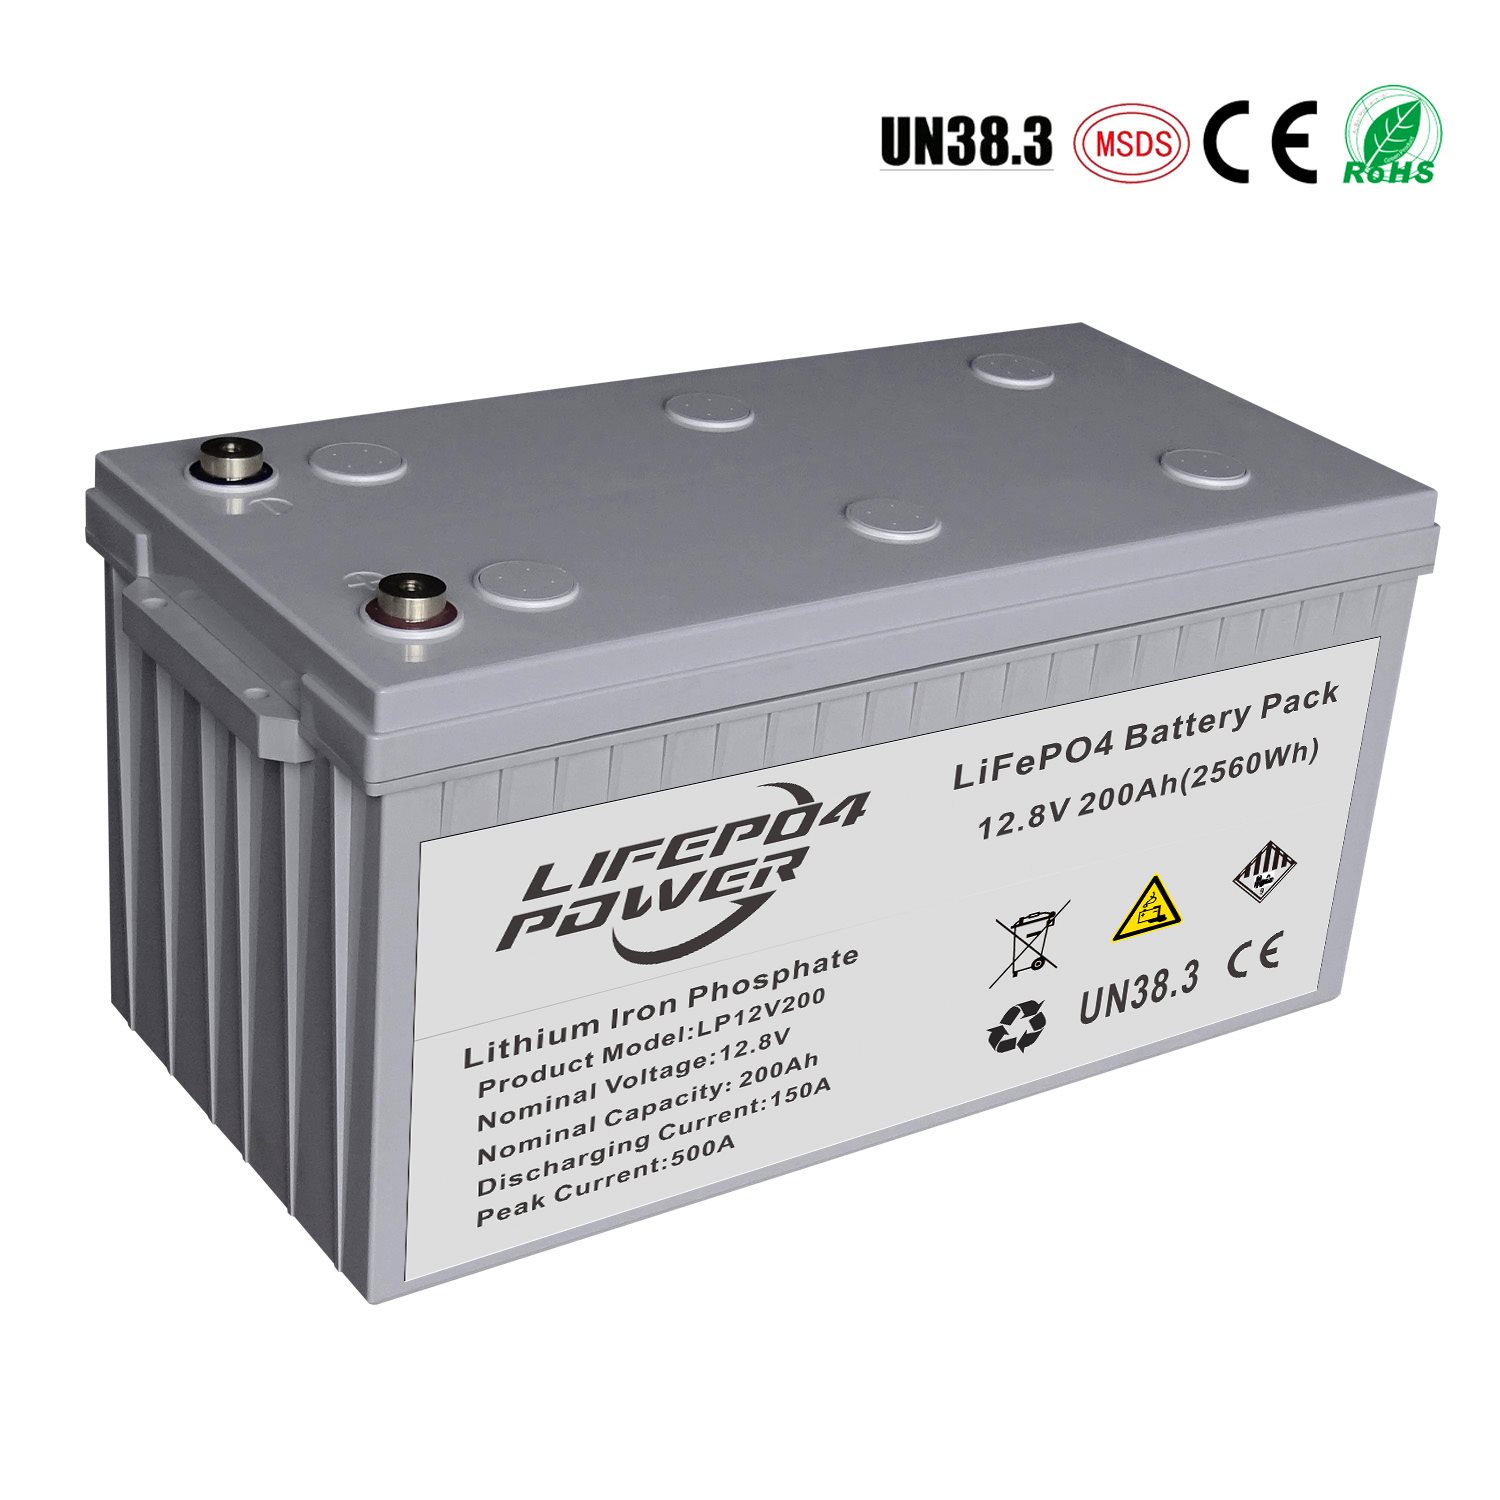 Lithium-železná fosfátová baterie 12V 200Ah